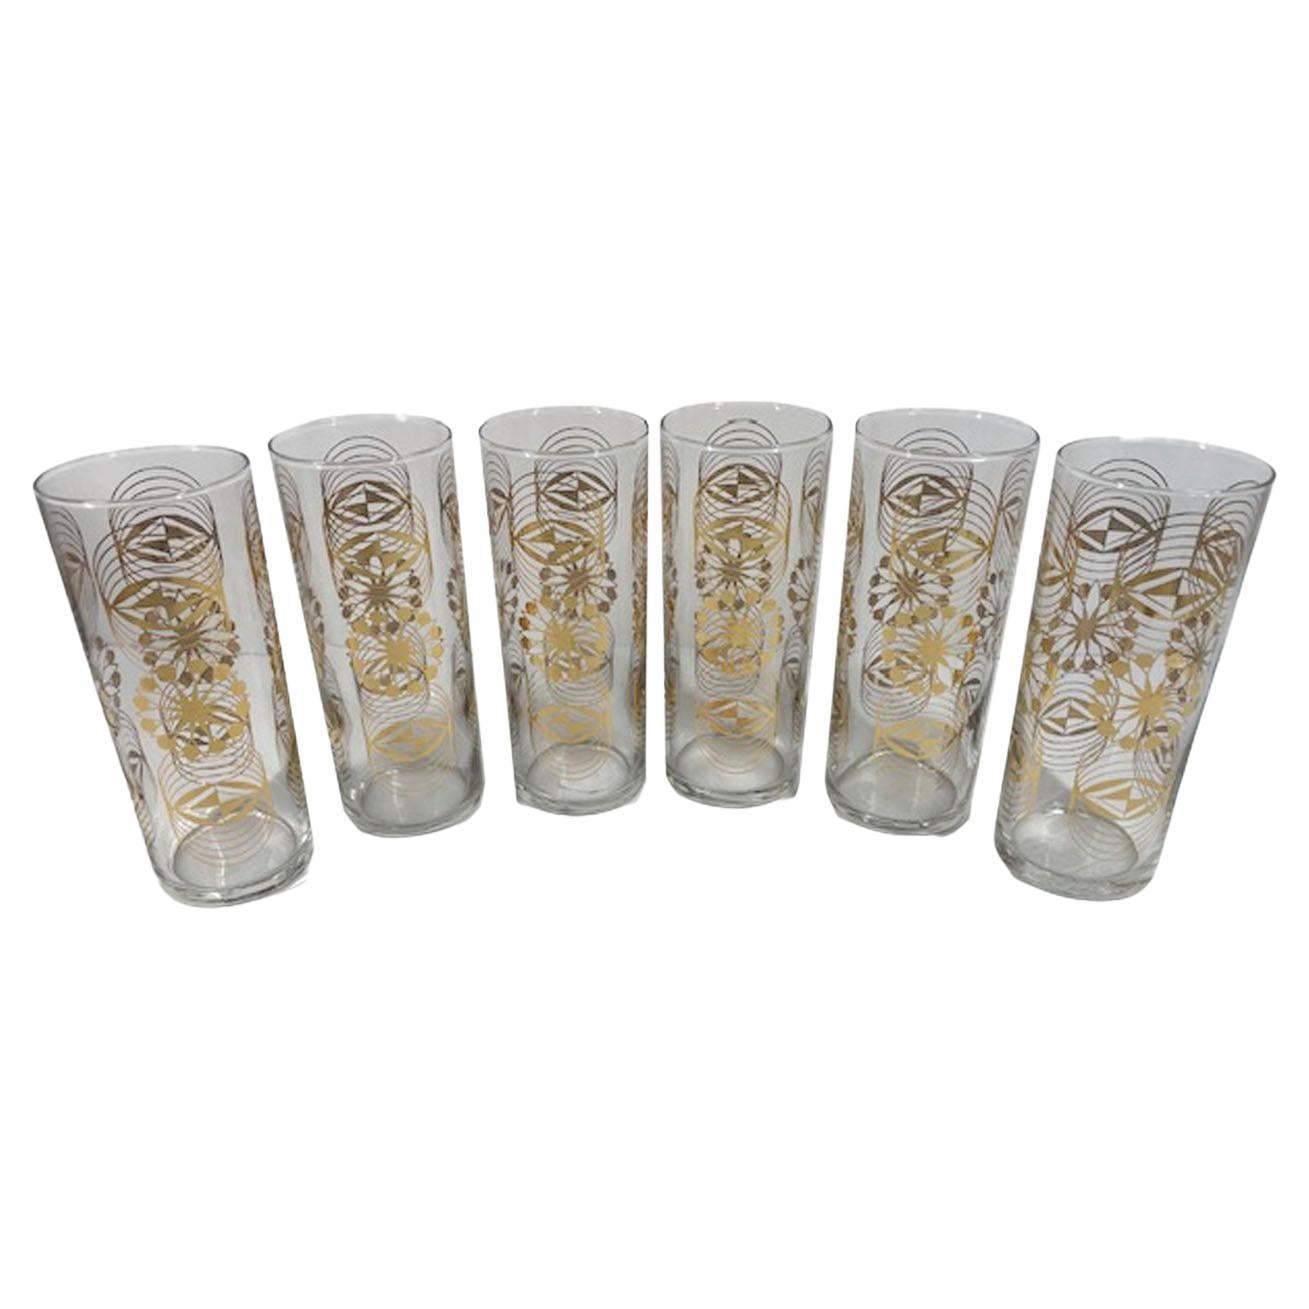 Six Vintage Ravenhead Highball Glasses with 22k Gold Geometric Designs